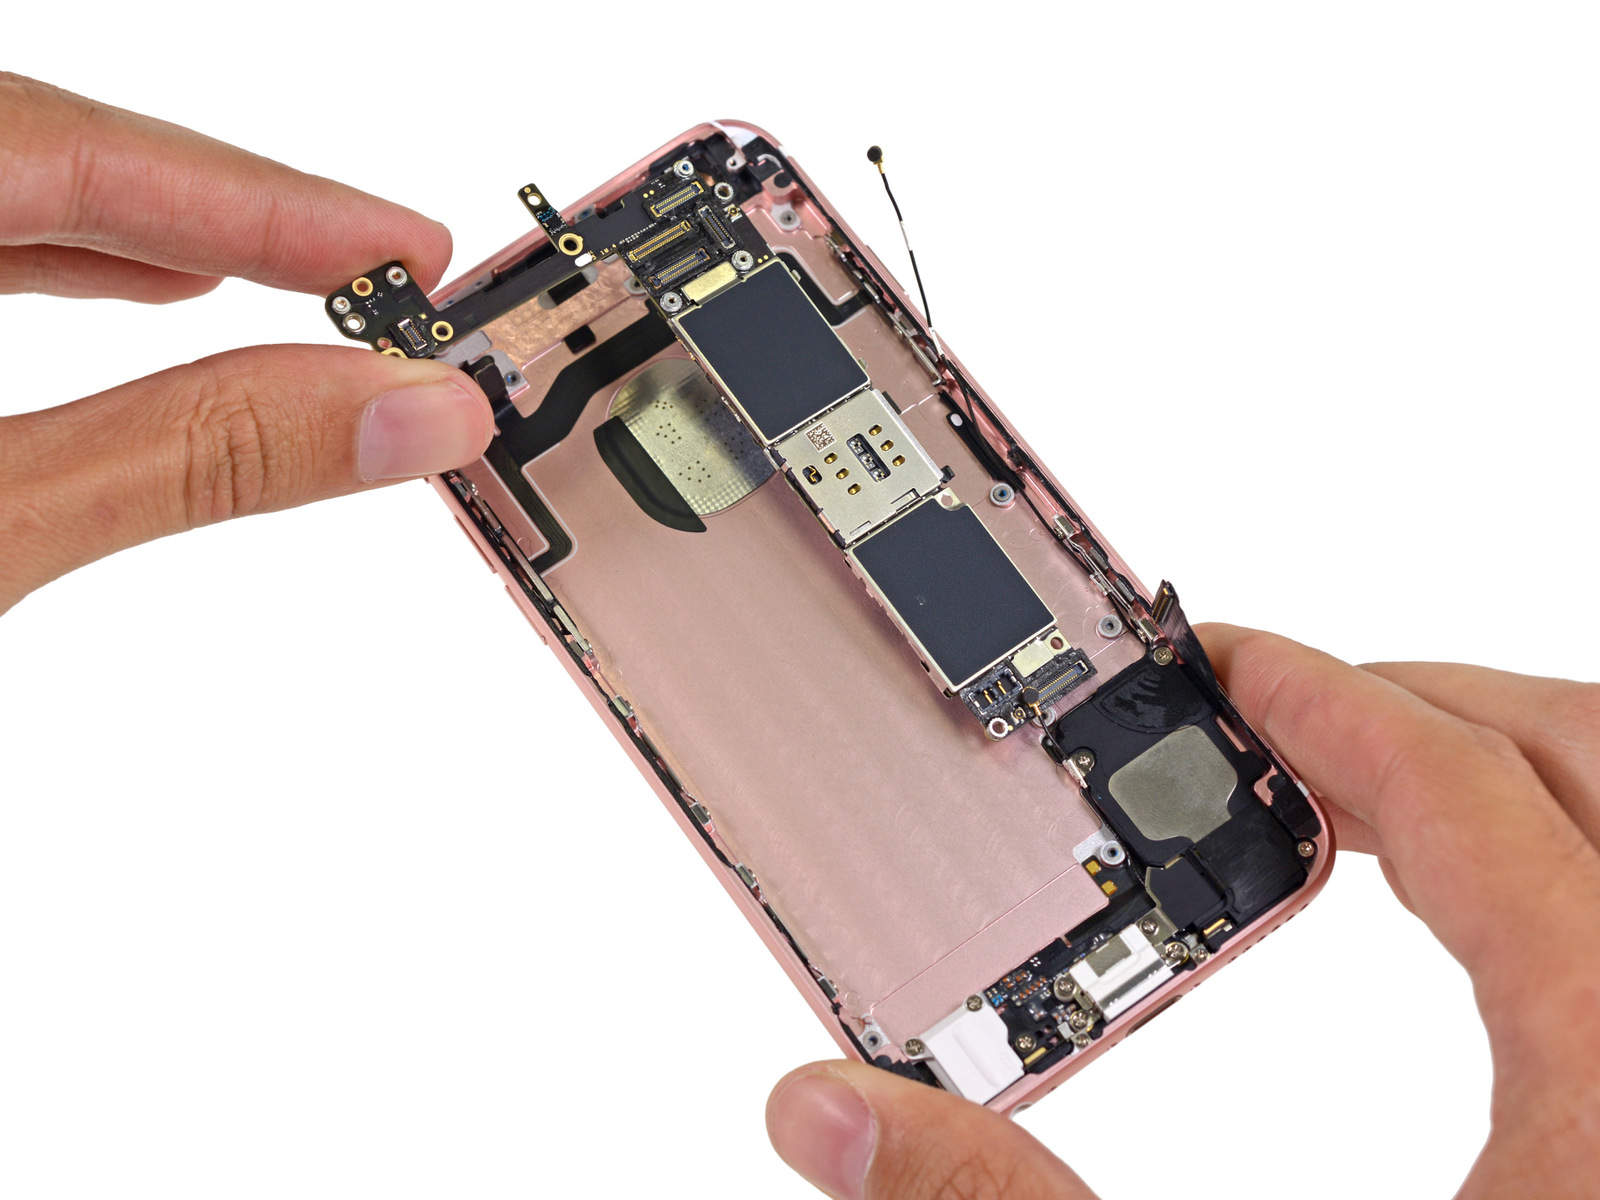 iPhone 6s teardown